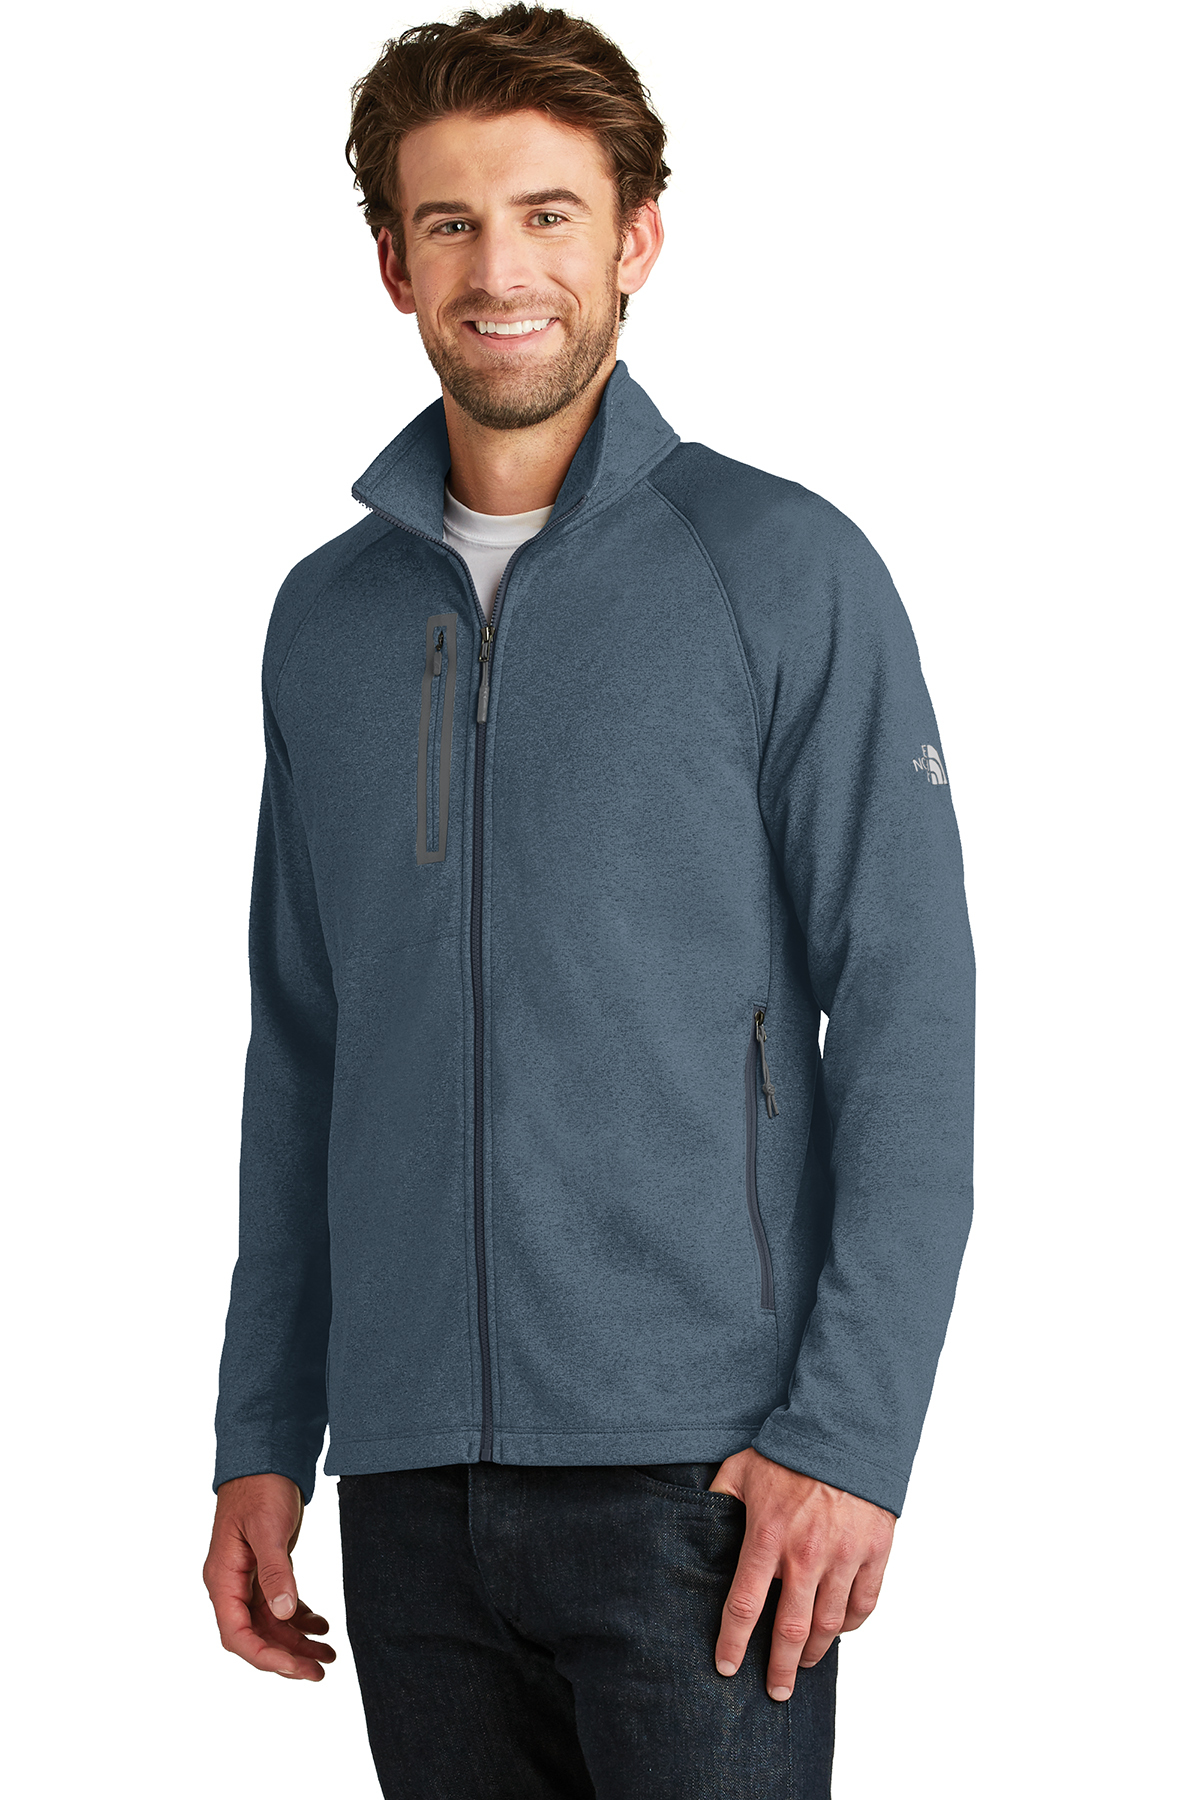 The North Face ® Canyon Flats Fleece Jacket | Product | SanMar